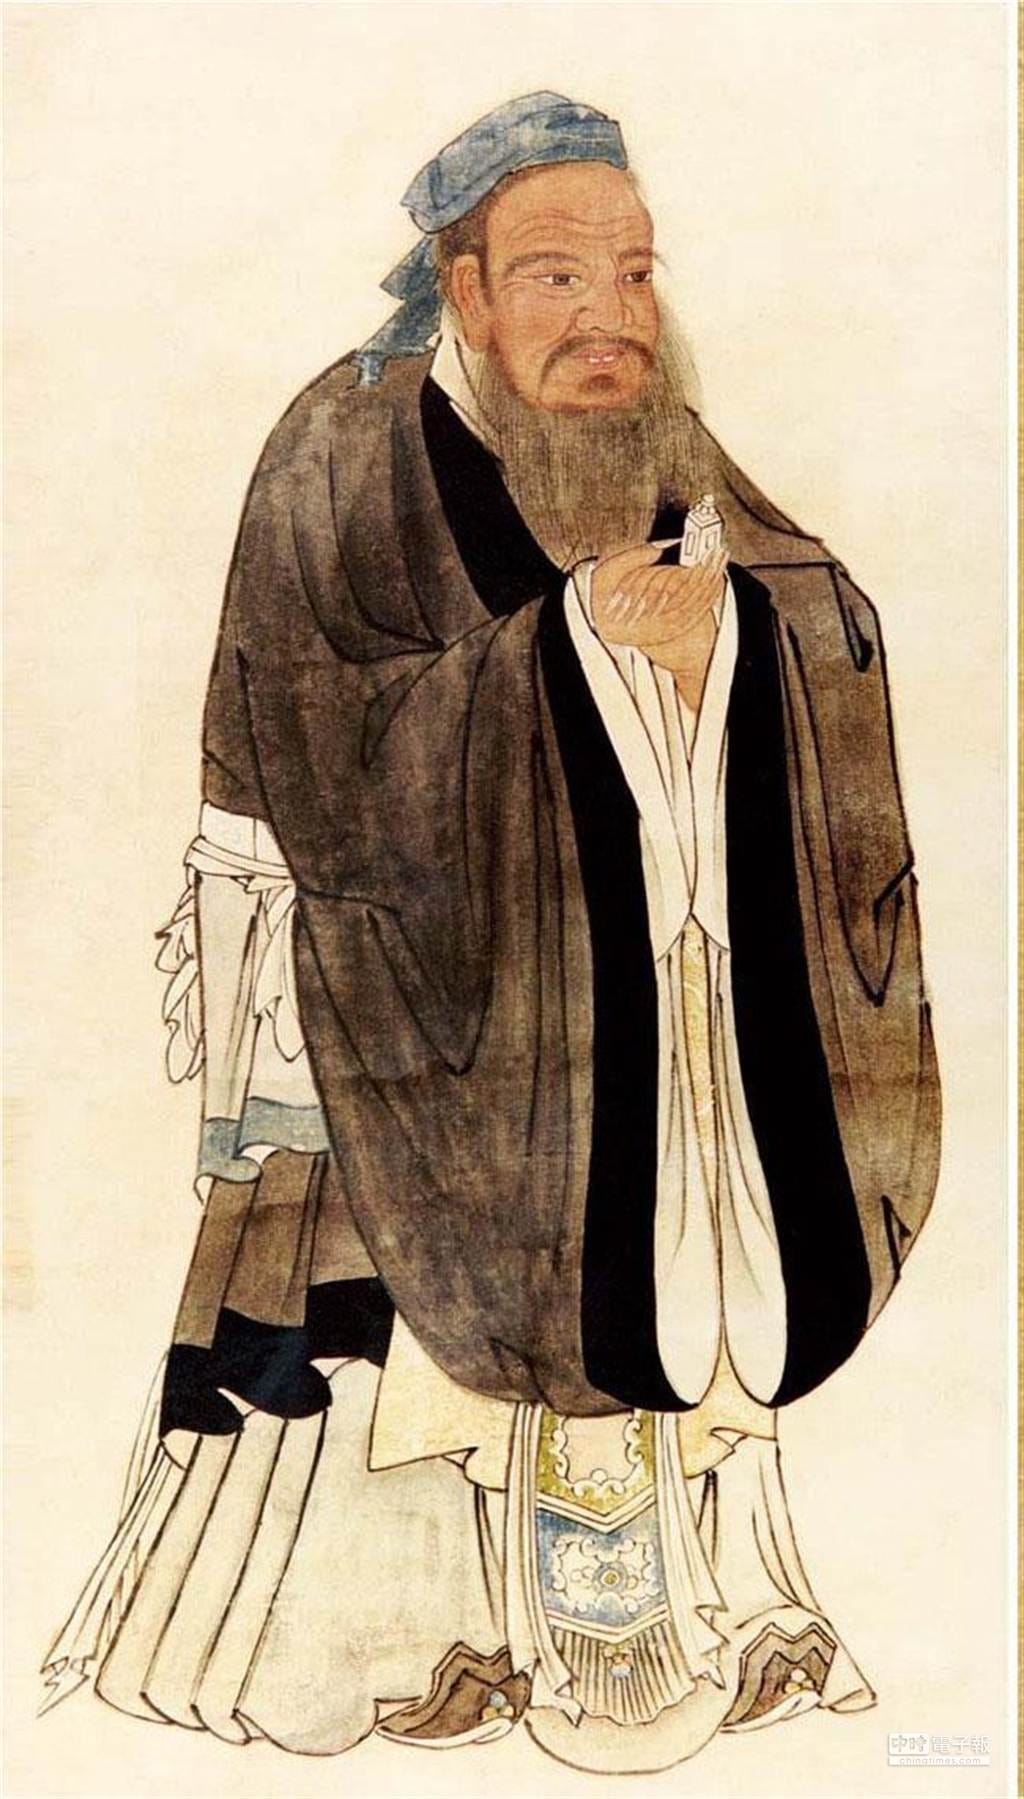 Confucius, a Chinese Philosopher